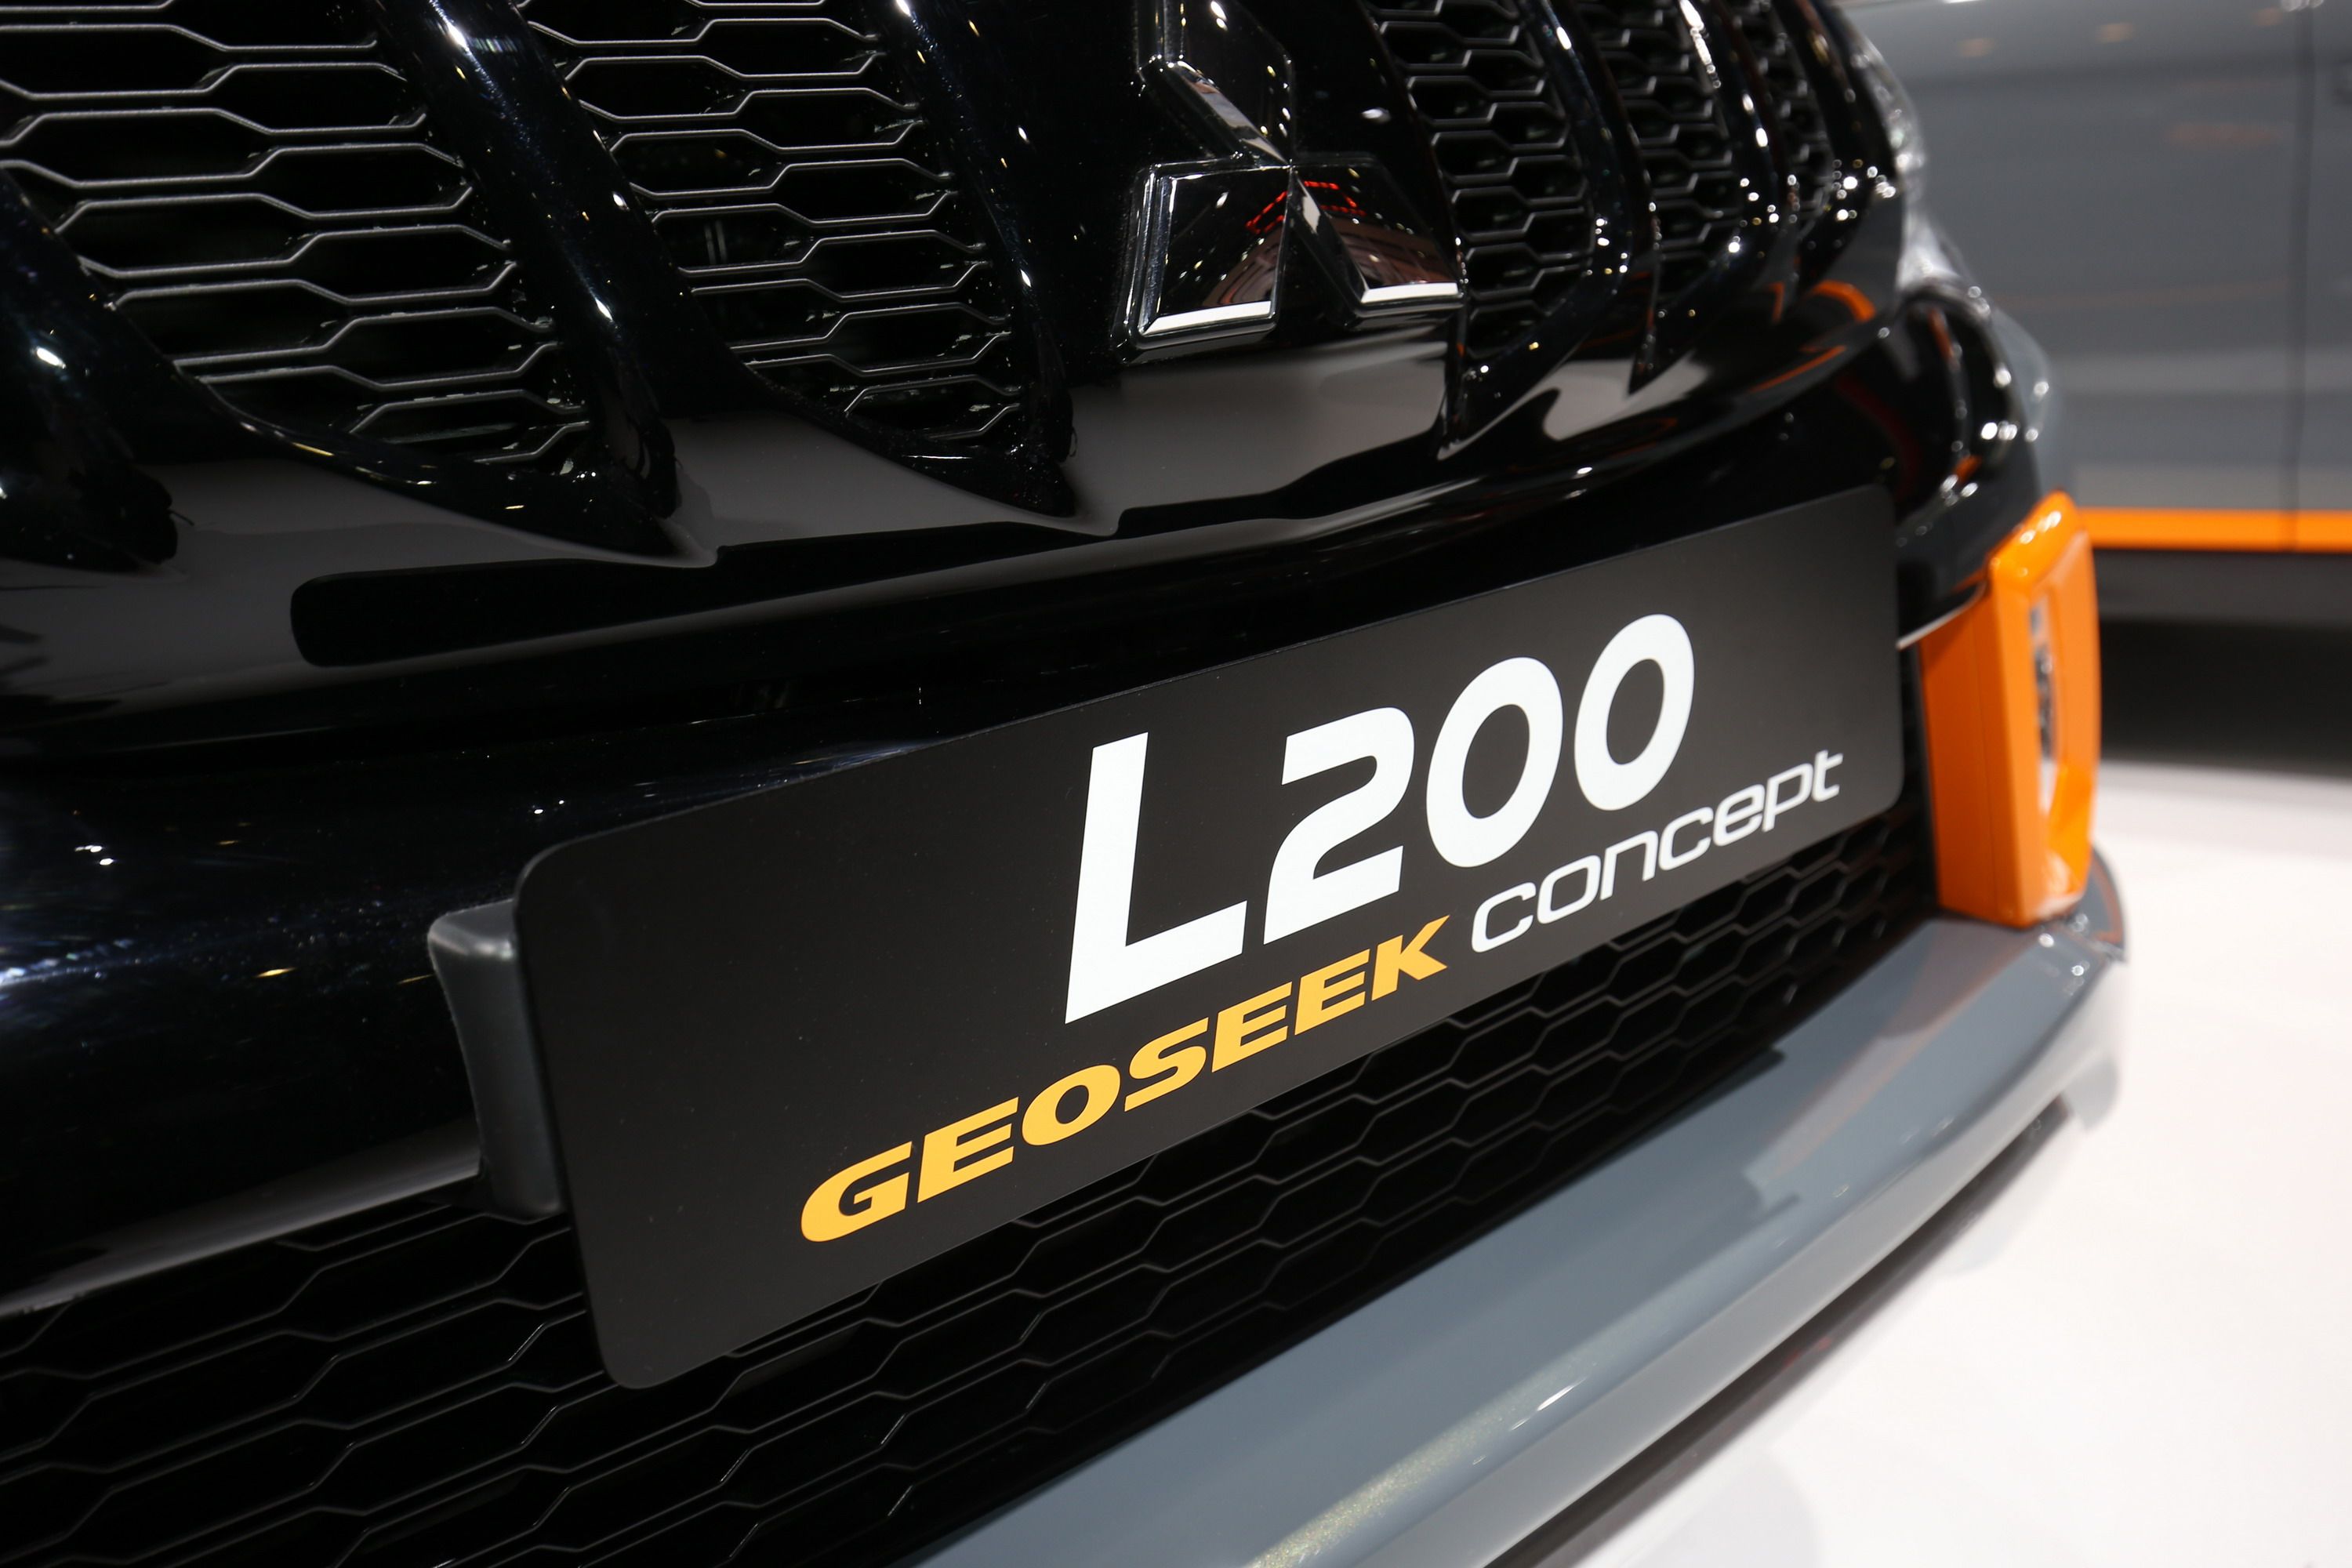 2016 Mitsubishi L200 Geoseek Concept